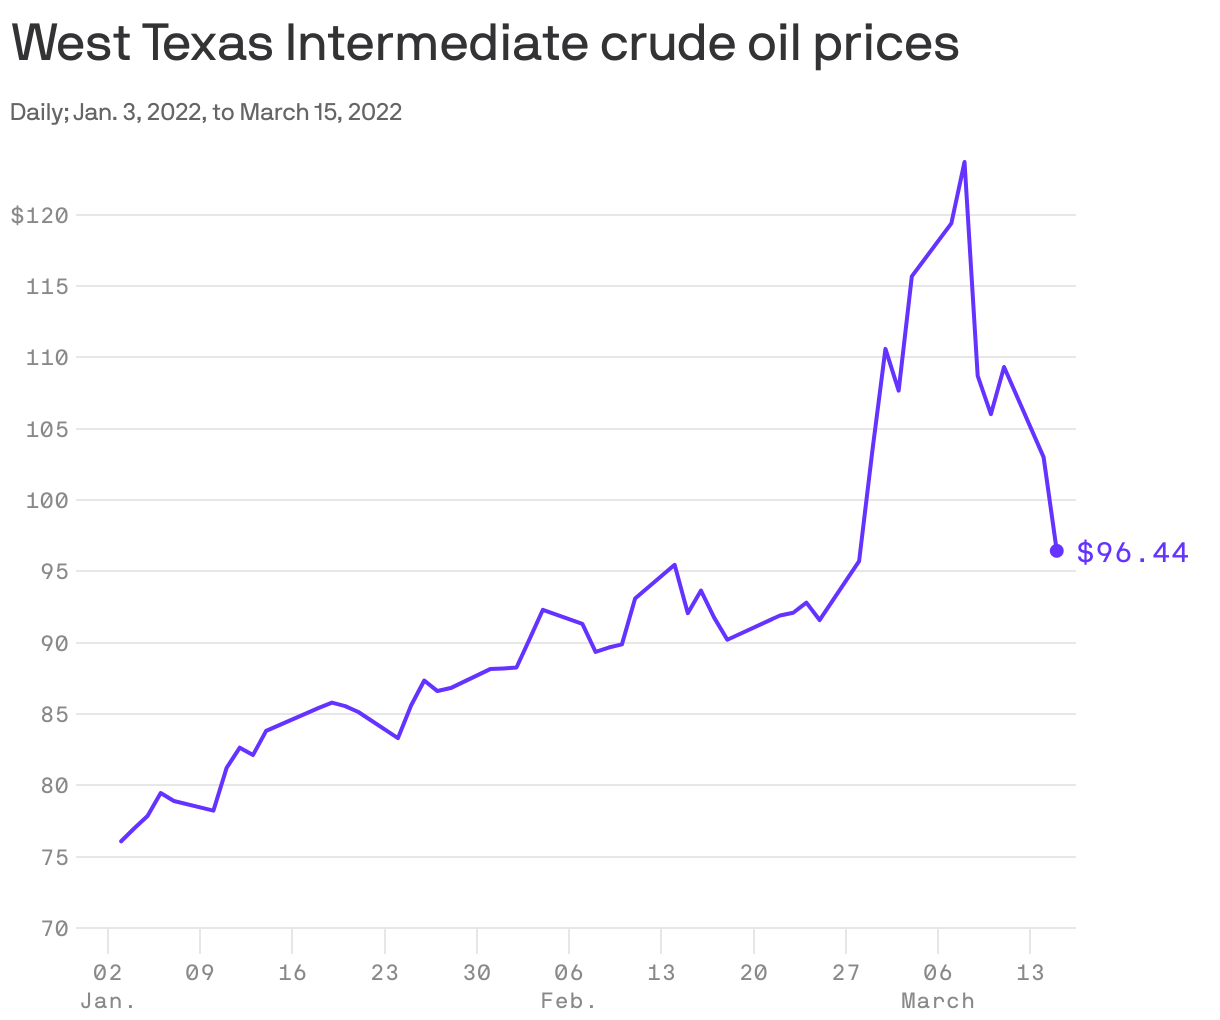 West Texas Intermediate crude oil prices